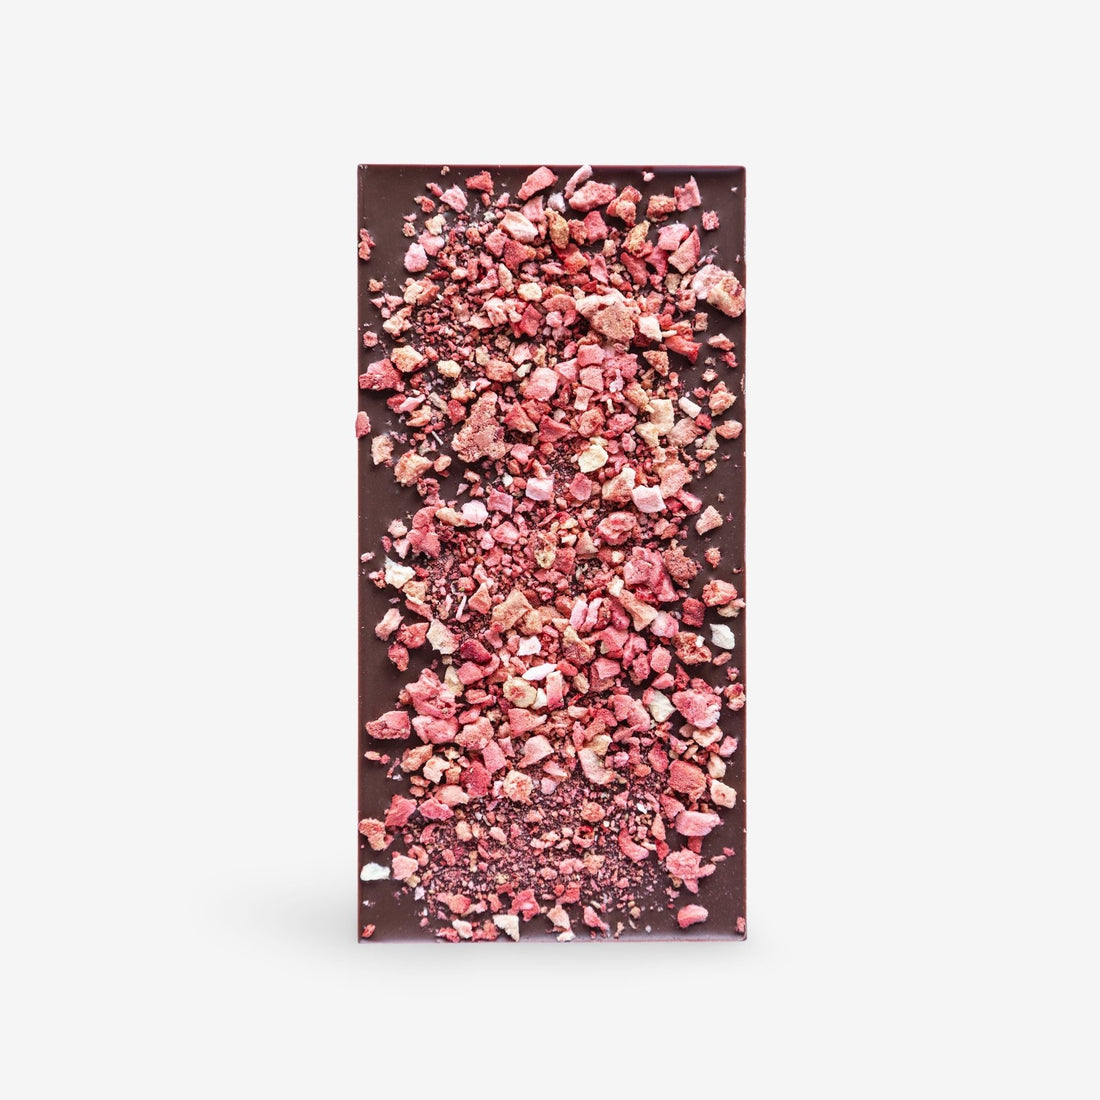 Shirl &amp; Moss Berry 55% Milk Chocolate Bar - The Flower Crate